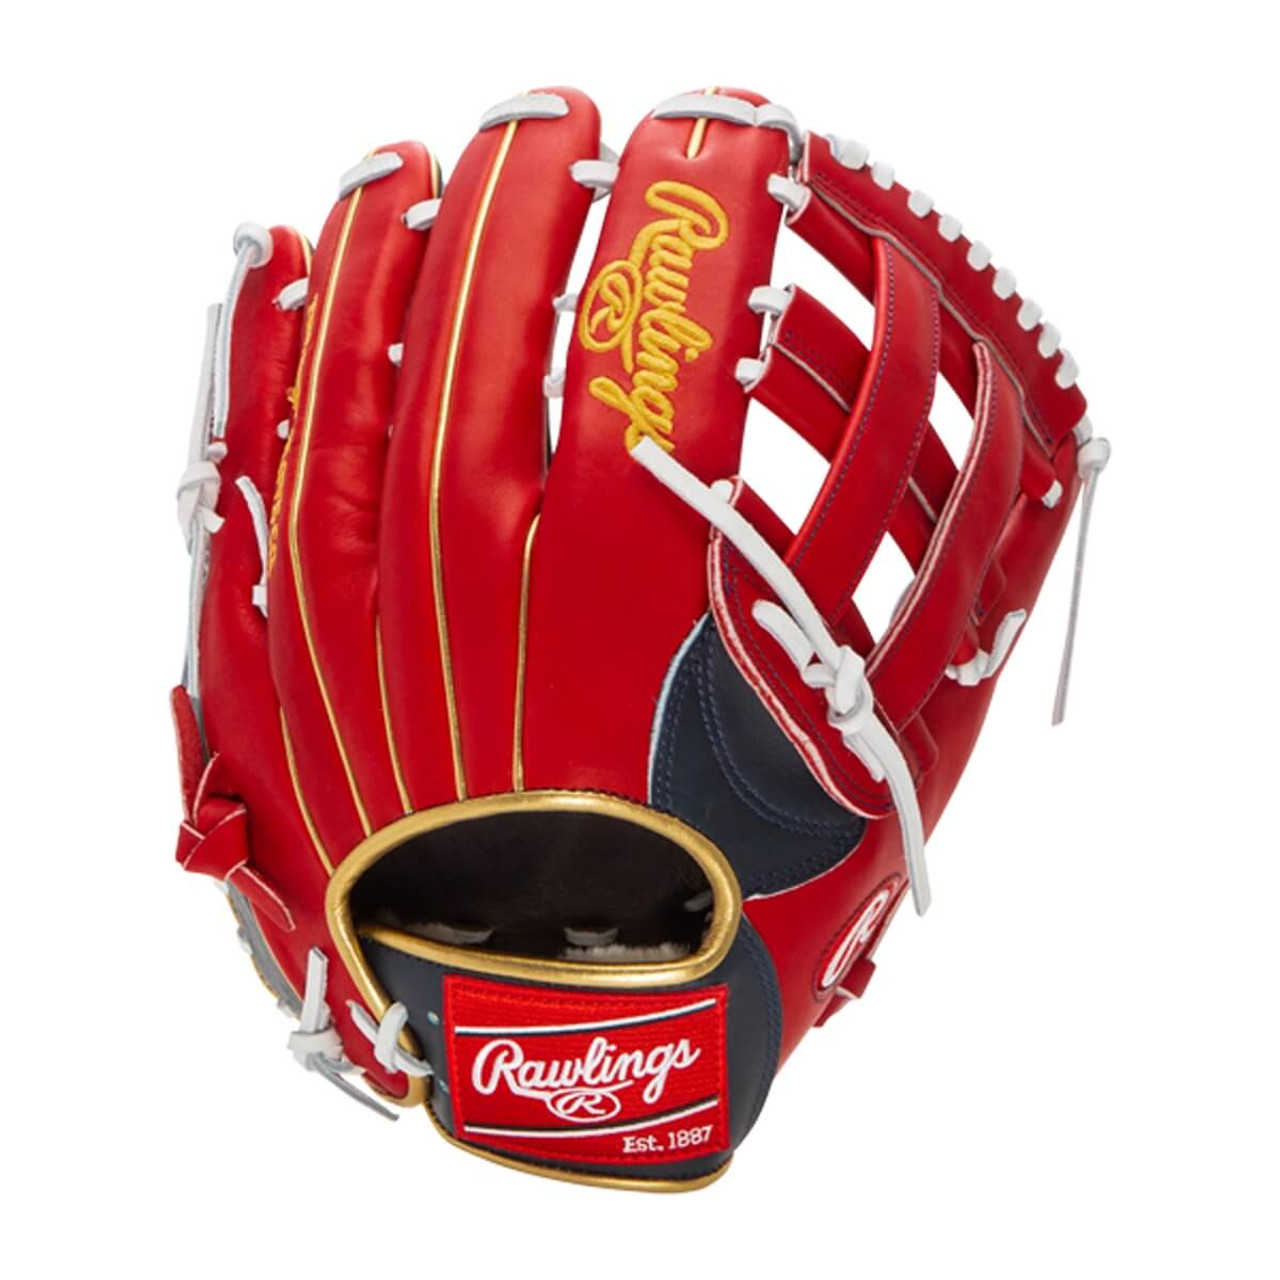 Rawlings Ronald Acuna Jr. Pro Preferred Baseball Glove 12.75 inch